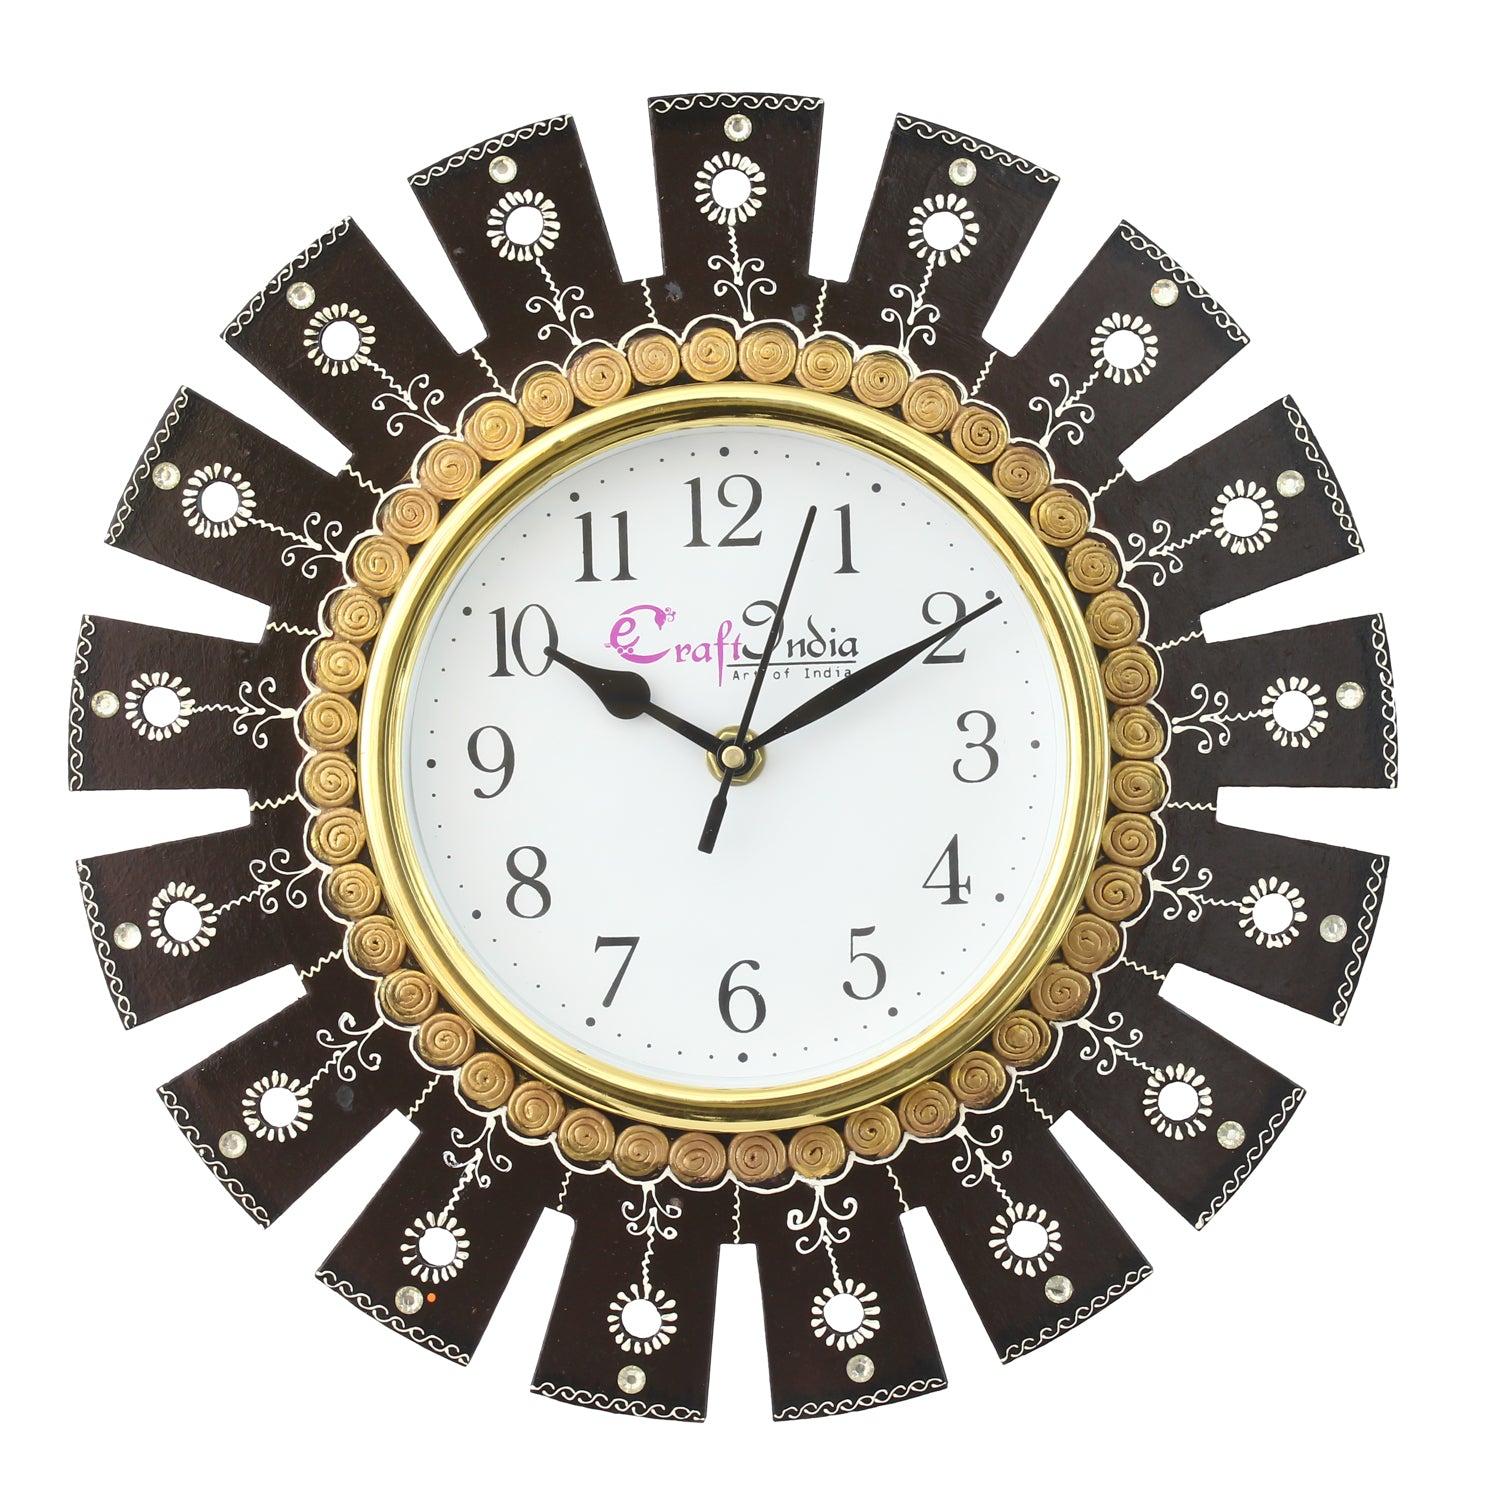 Decorative Handicrafted Paper Mache Wooden Wall Clock